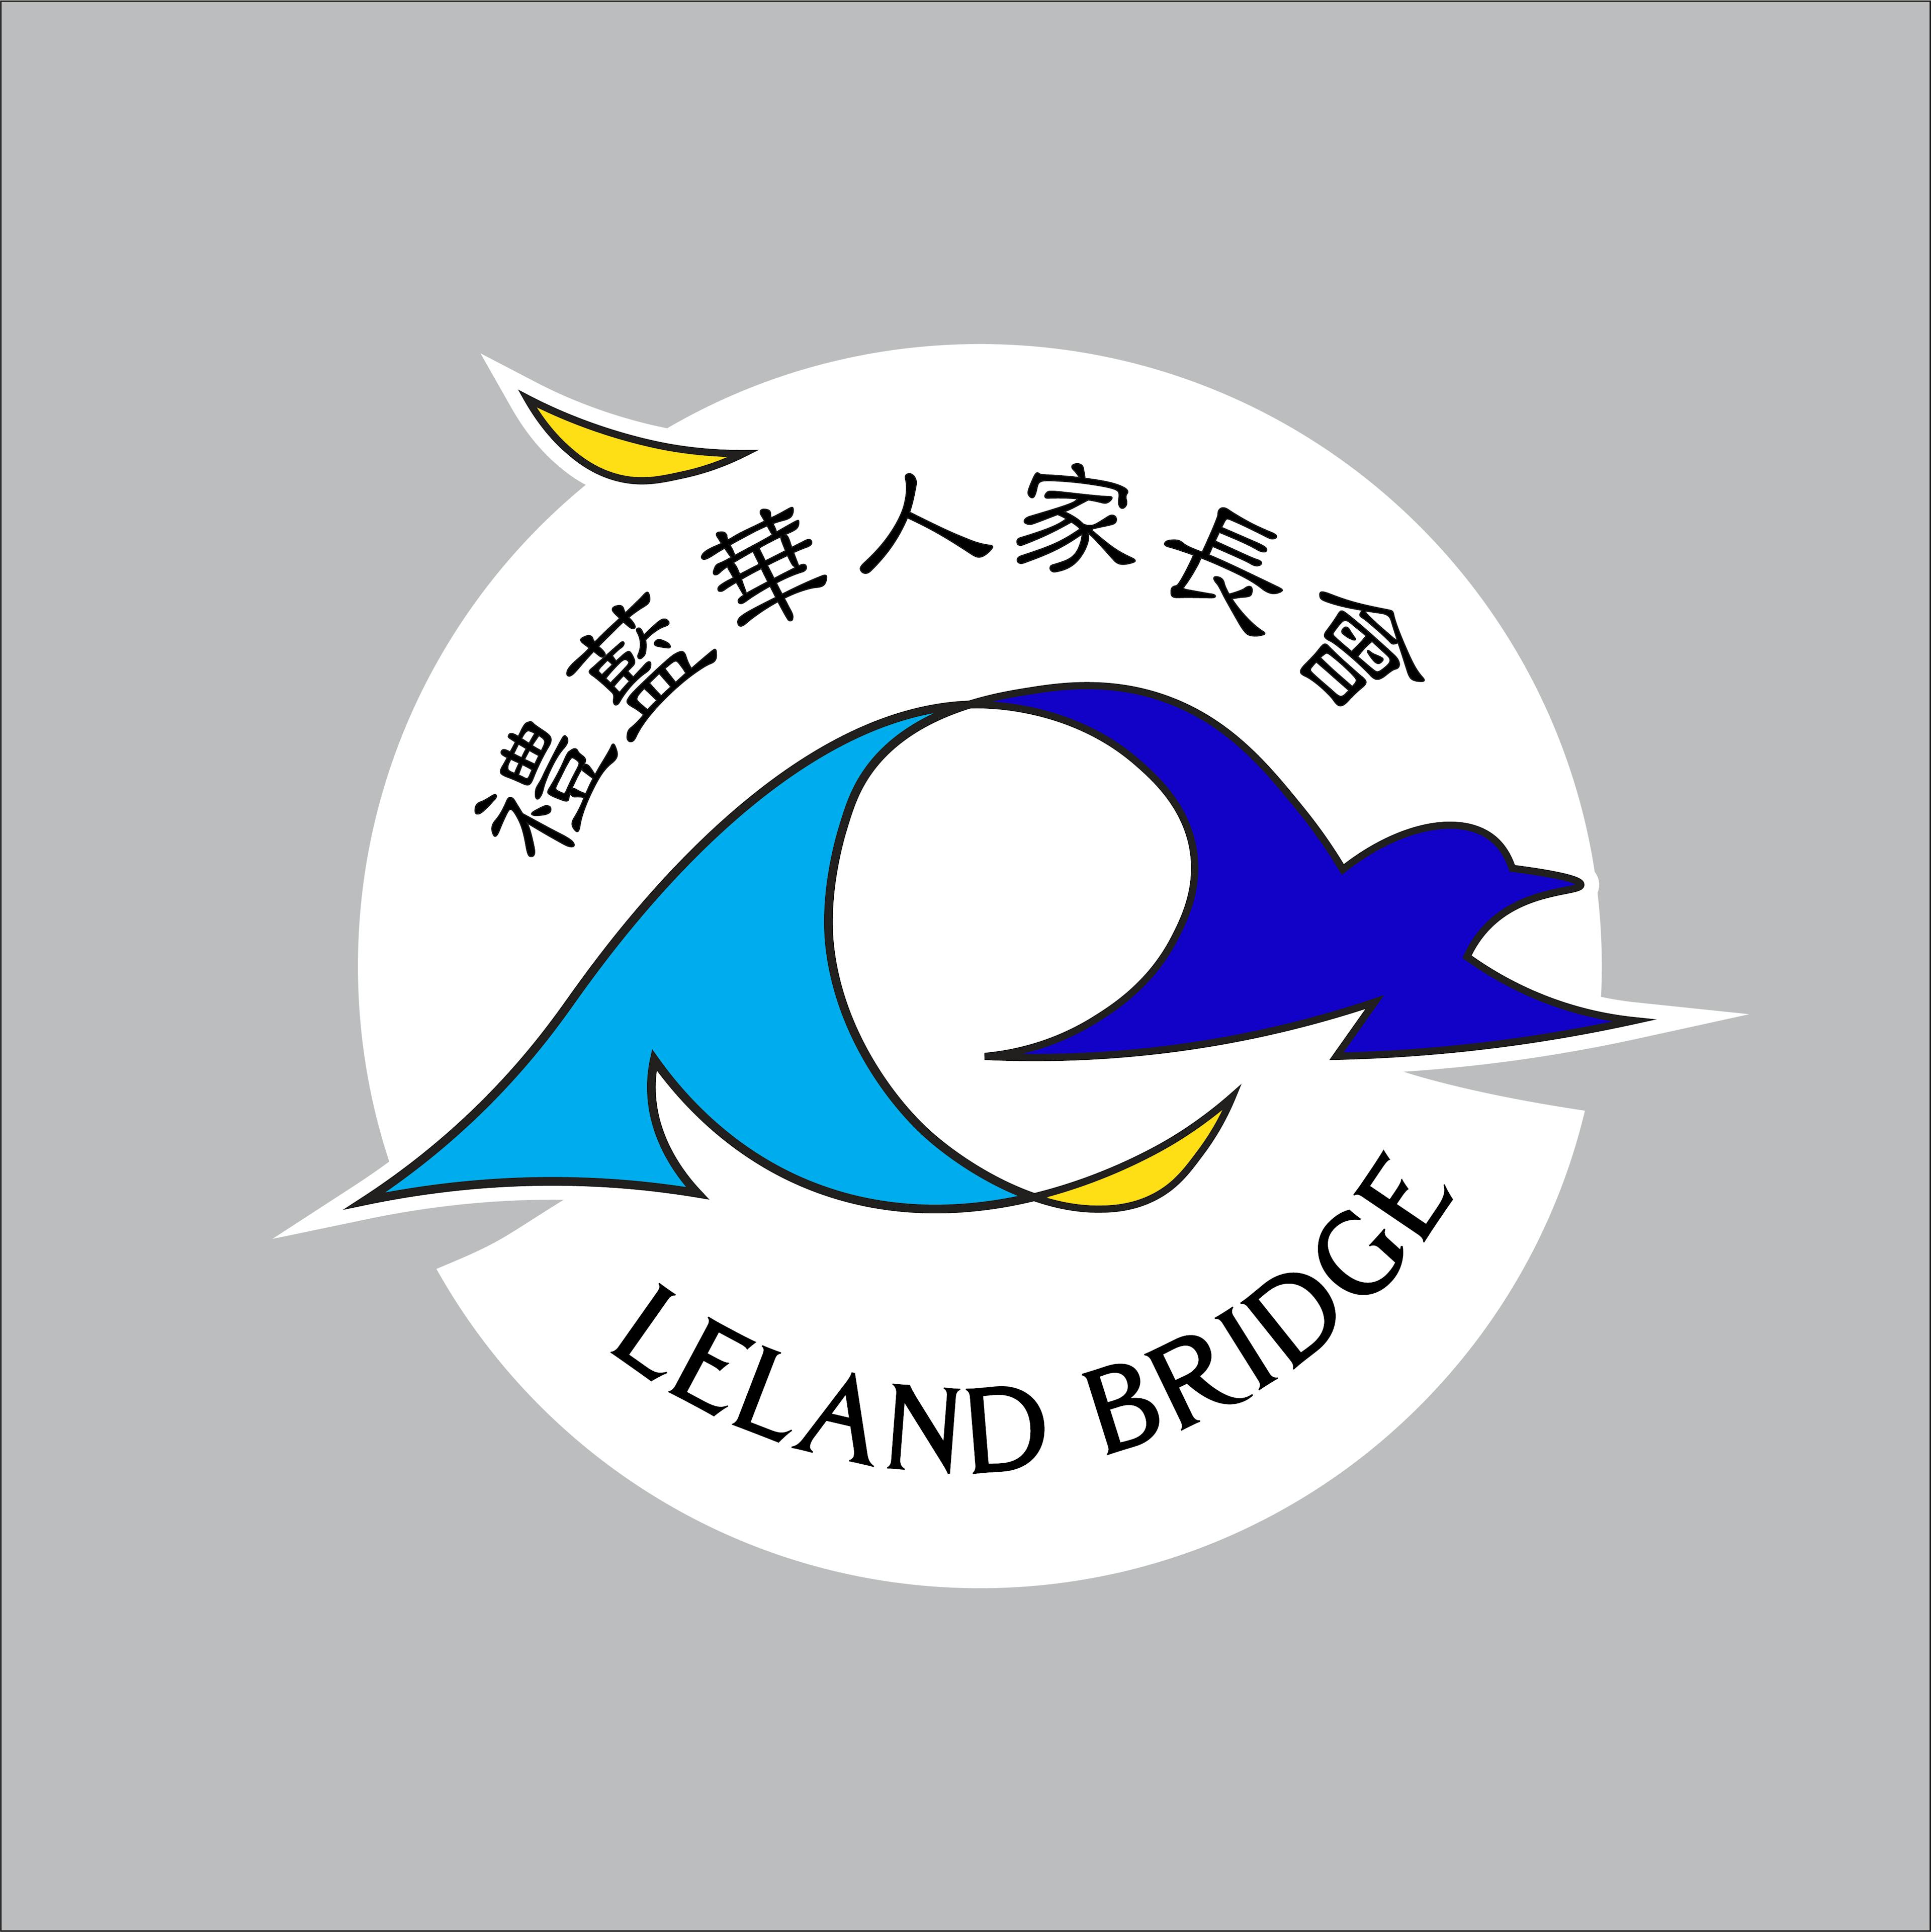 Leland Bridge Logo